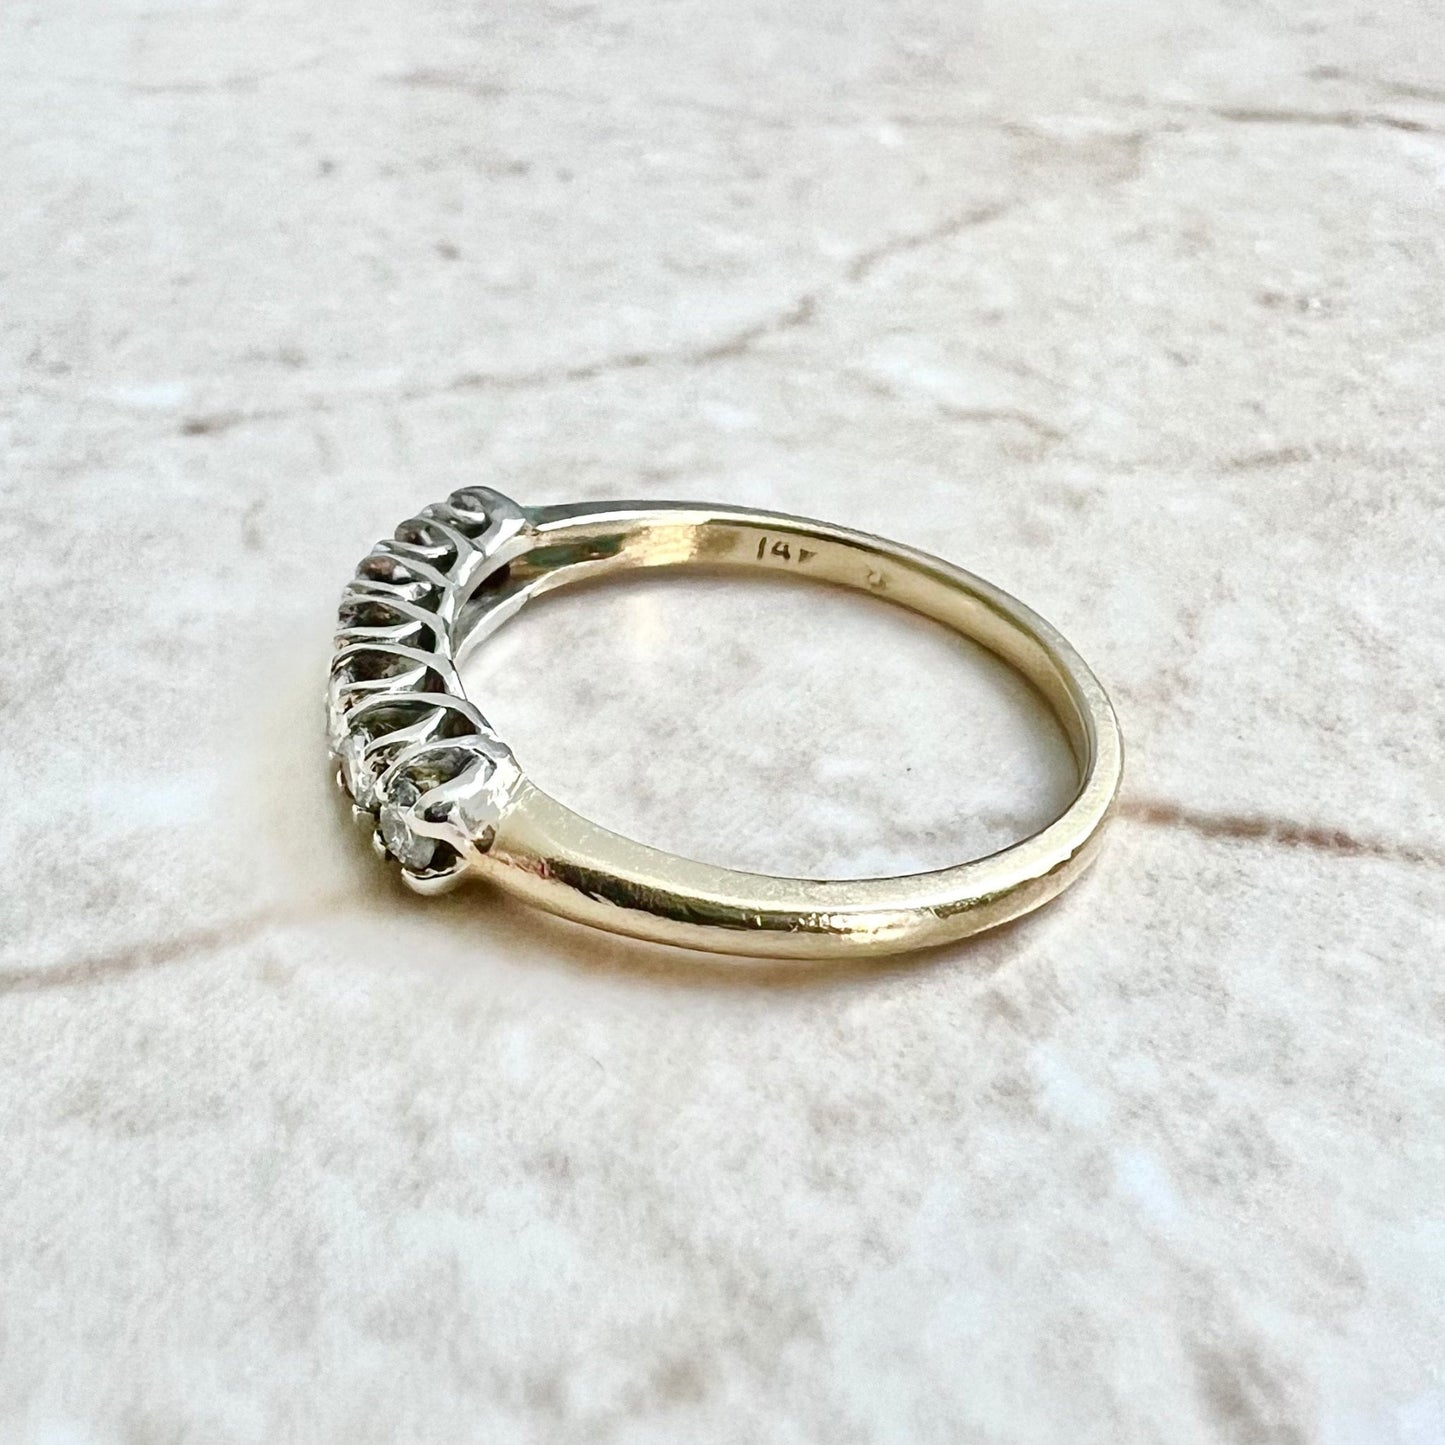 Vintage 14K 7 Stone Diamond Band Ring 0.30 CTTW - Two Tone Gold Diamond Ring - Seven Stone Ring - Anniversary Ring - Diamond Wedding Ring